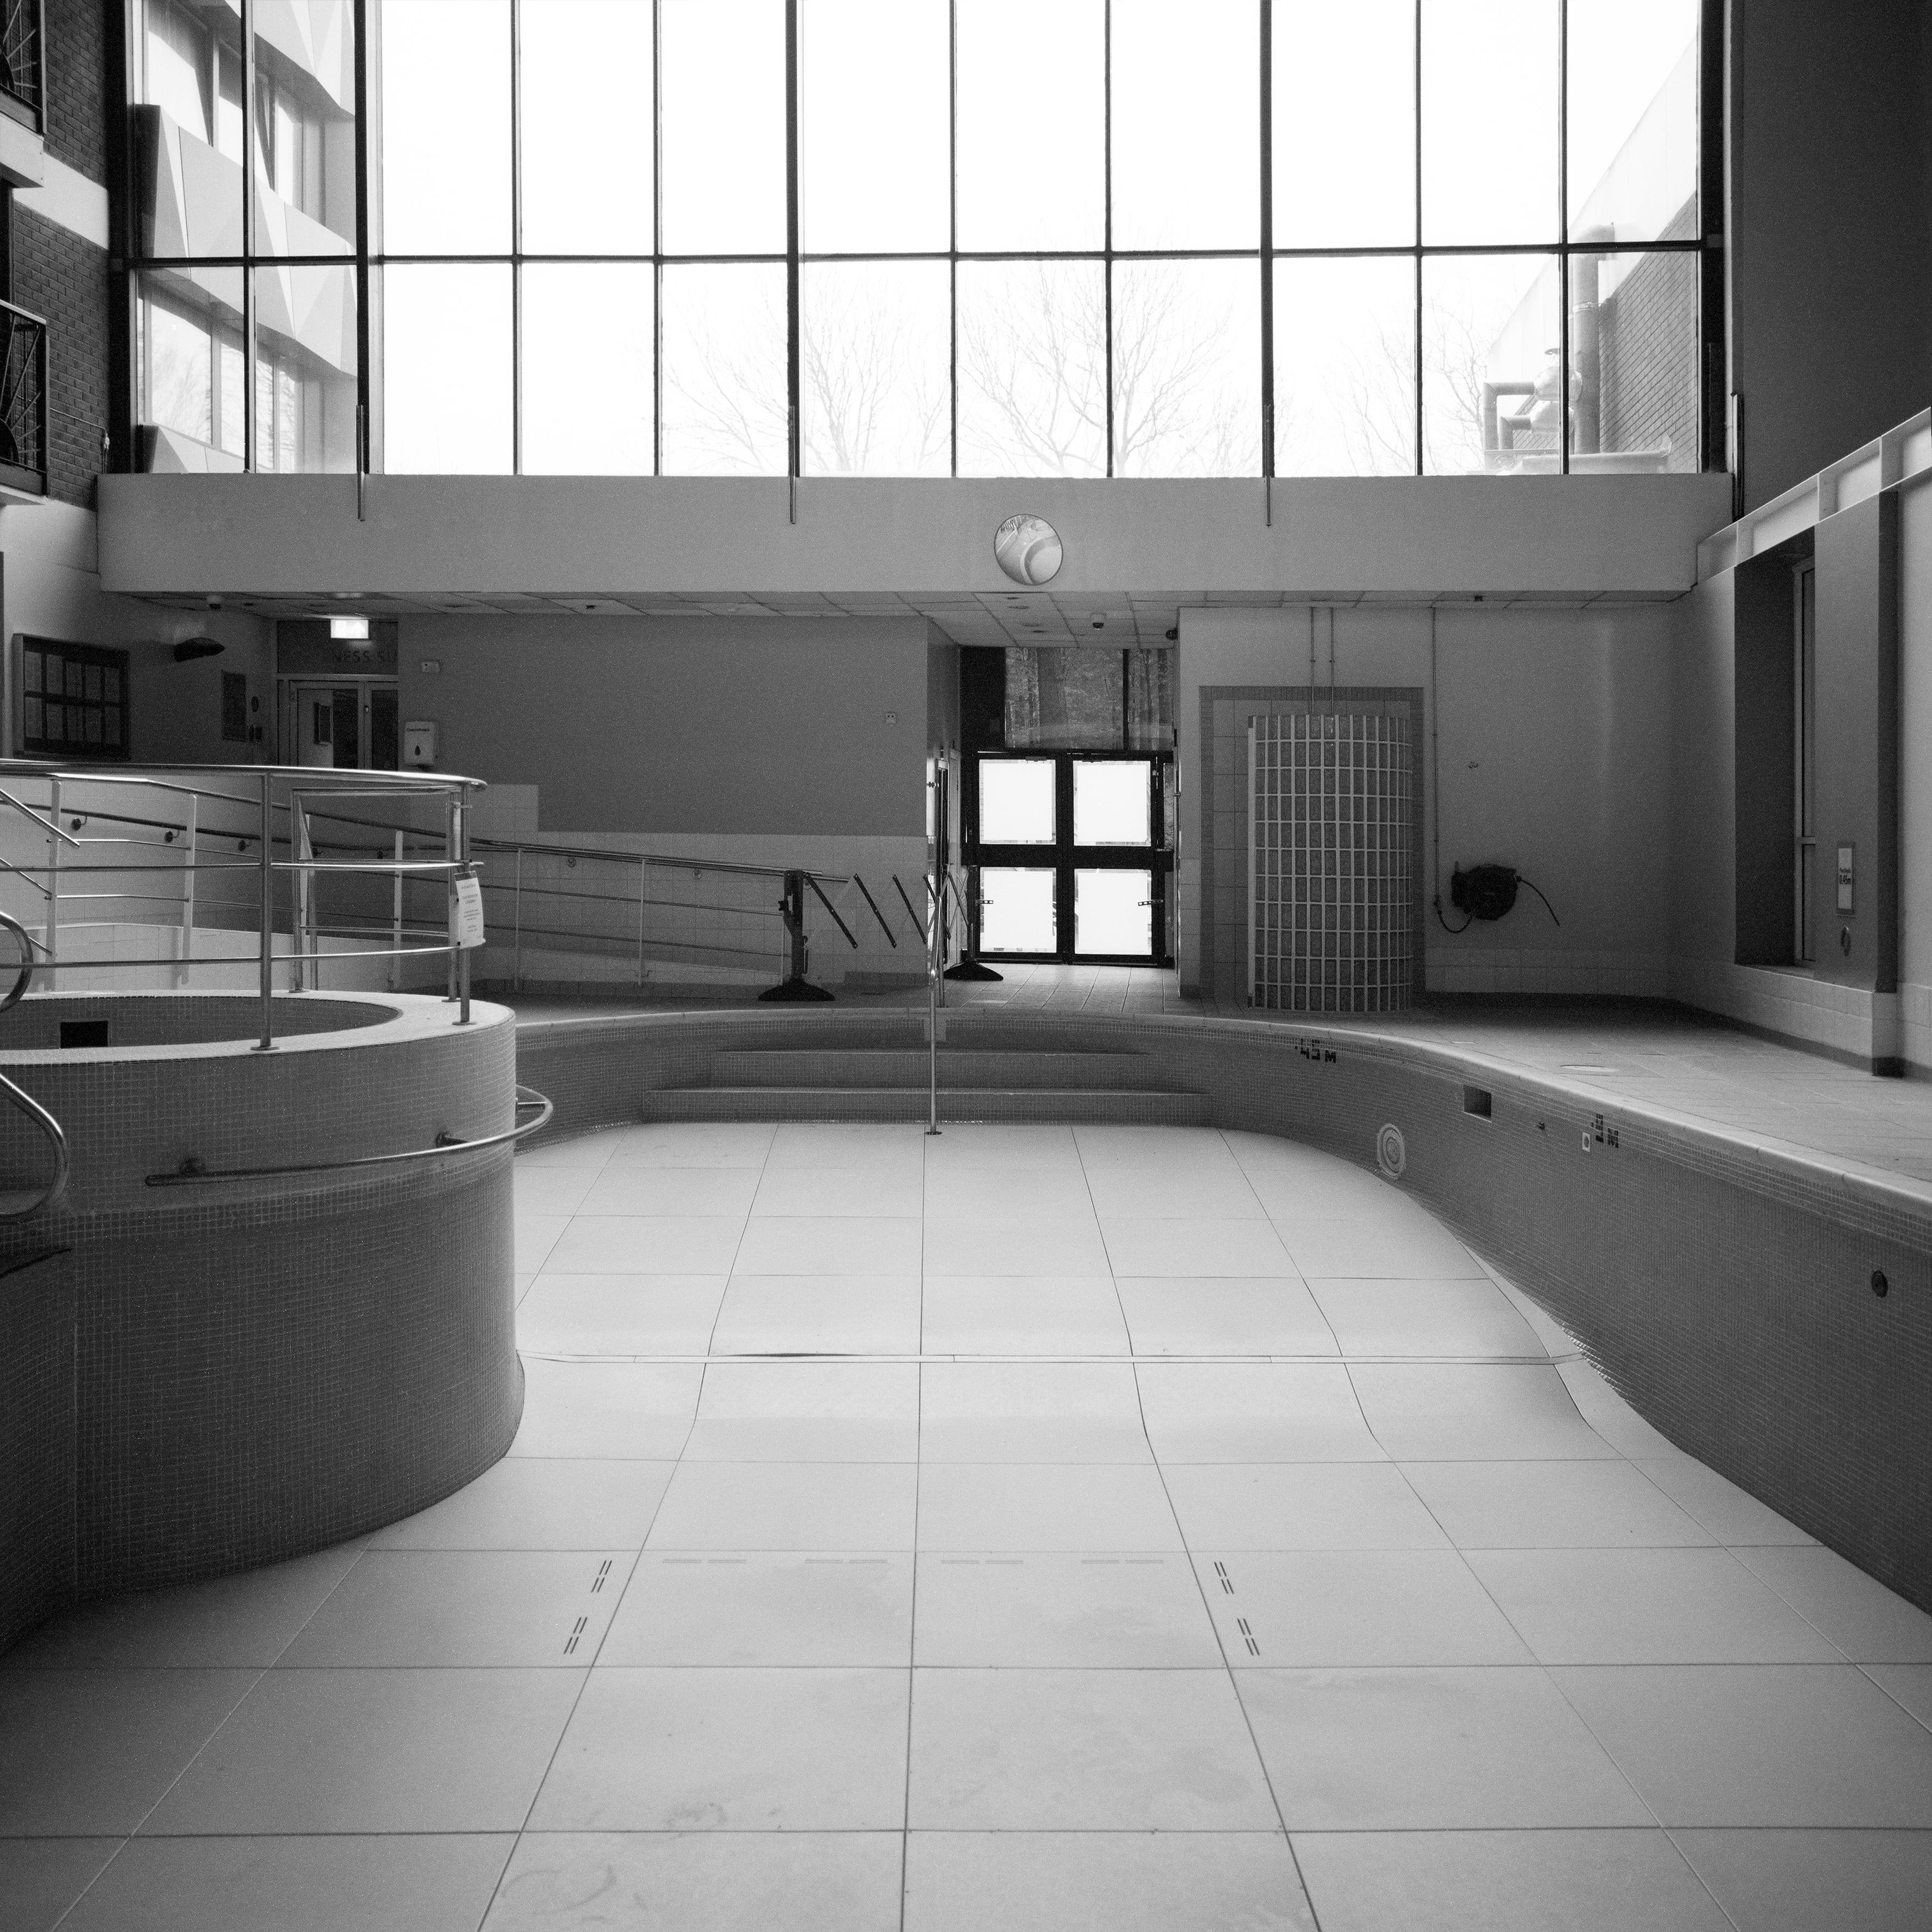 Anna Dobrovolskaya-Mints Black and White Photograph - Monochrome Square Architecture Photography: Empty Swimming Pool Design.